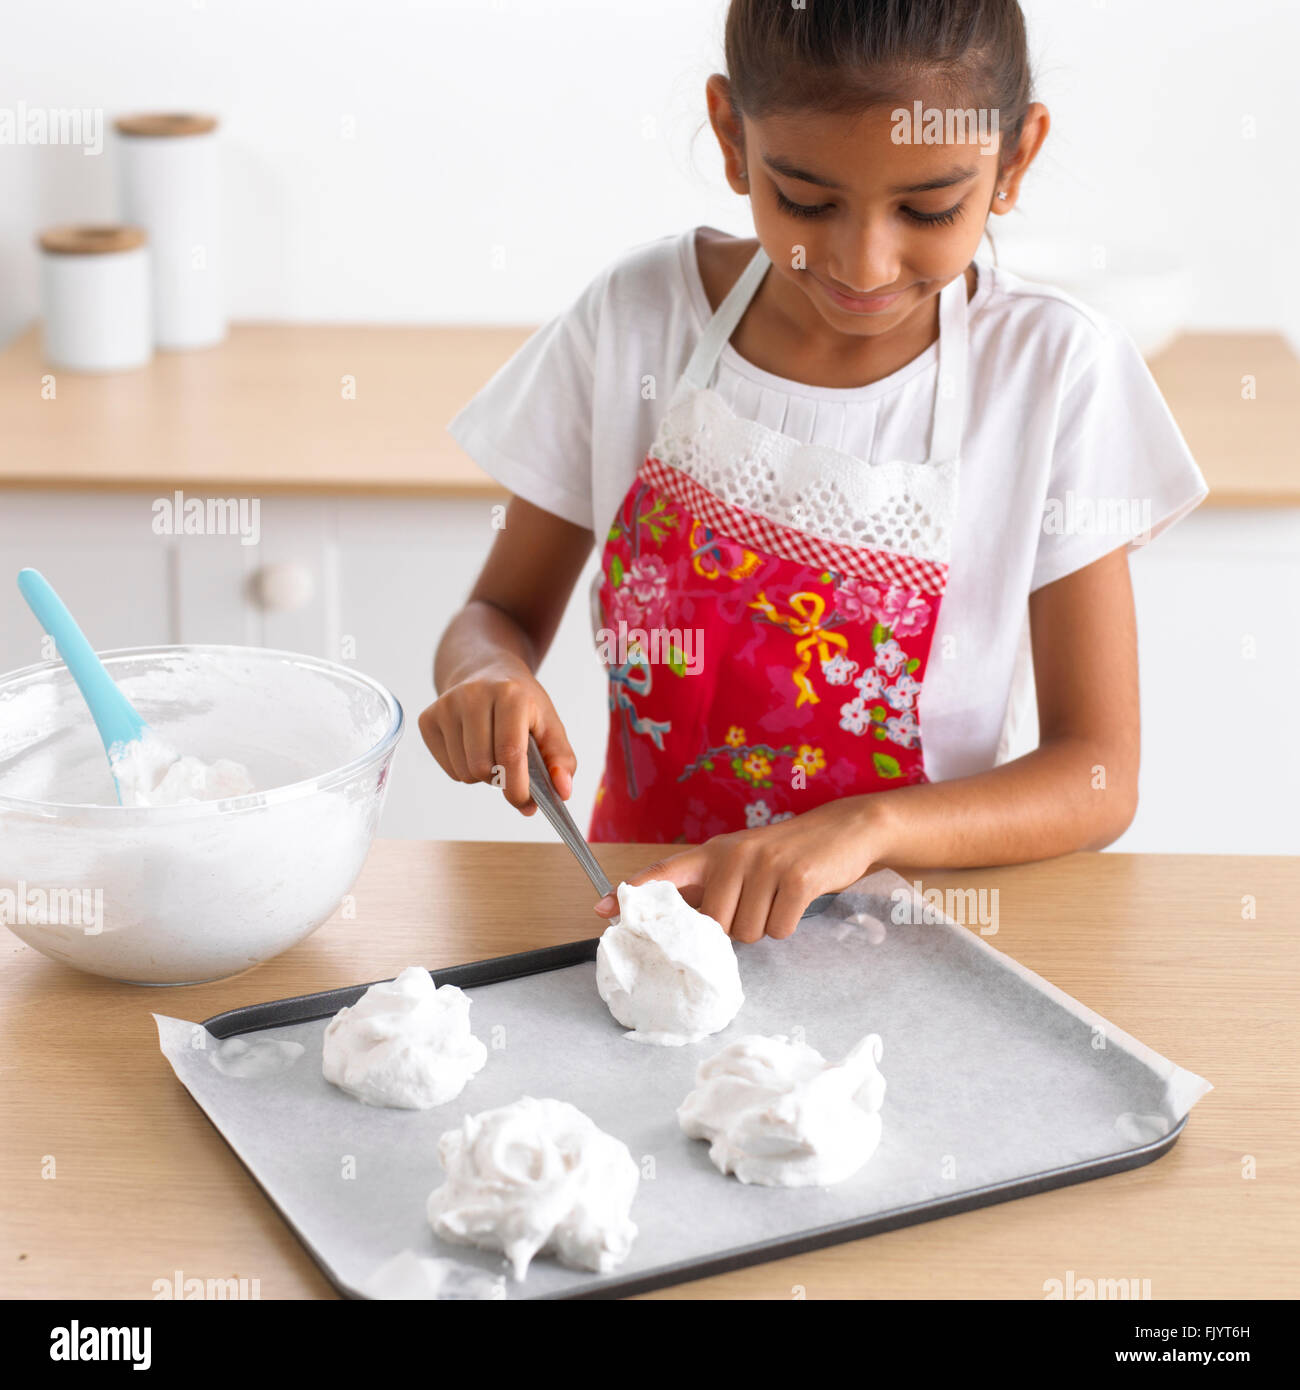 Spooning uncooked meringue onto baking tray, 8 years Stock Photo